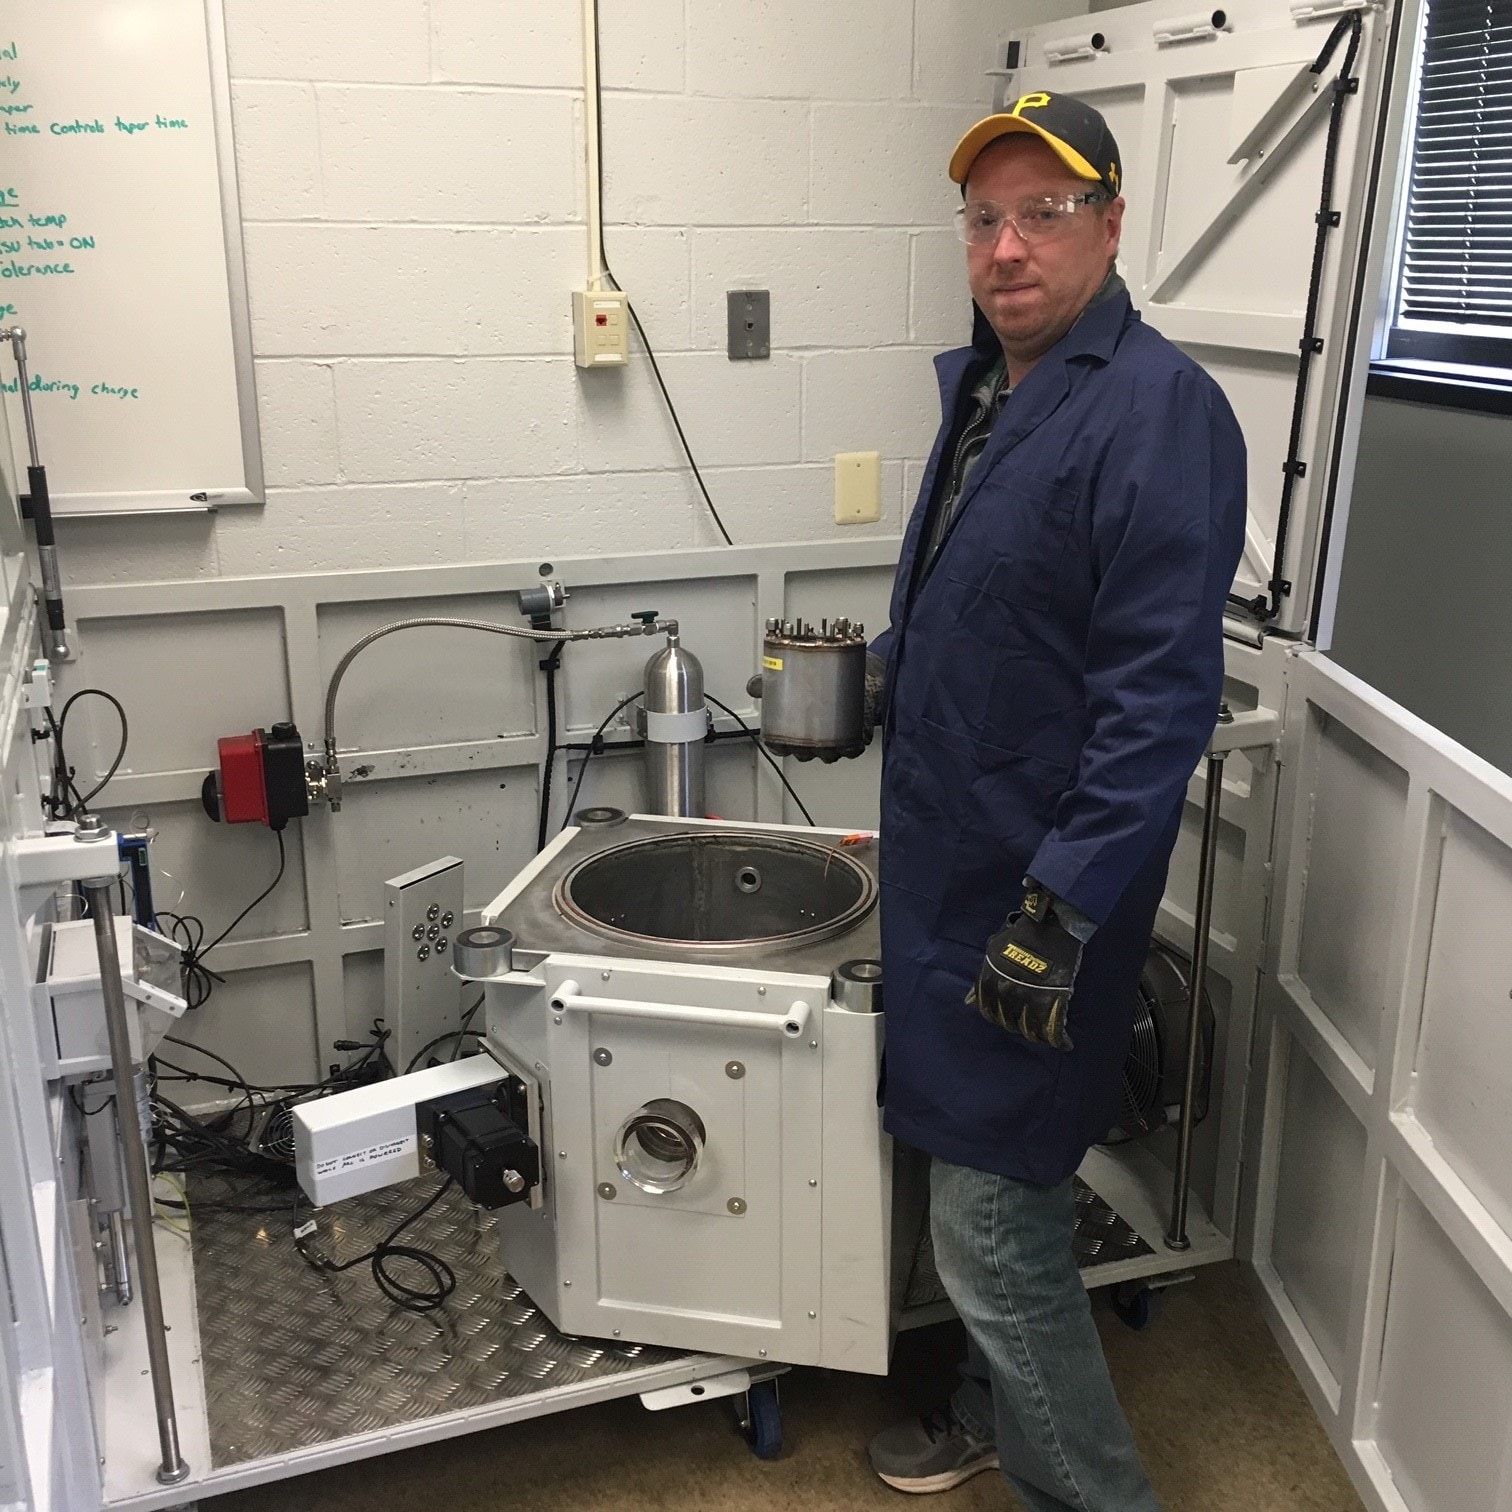 NIOSH technician standing next to accelerating rate calorimeter.